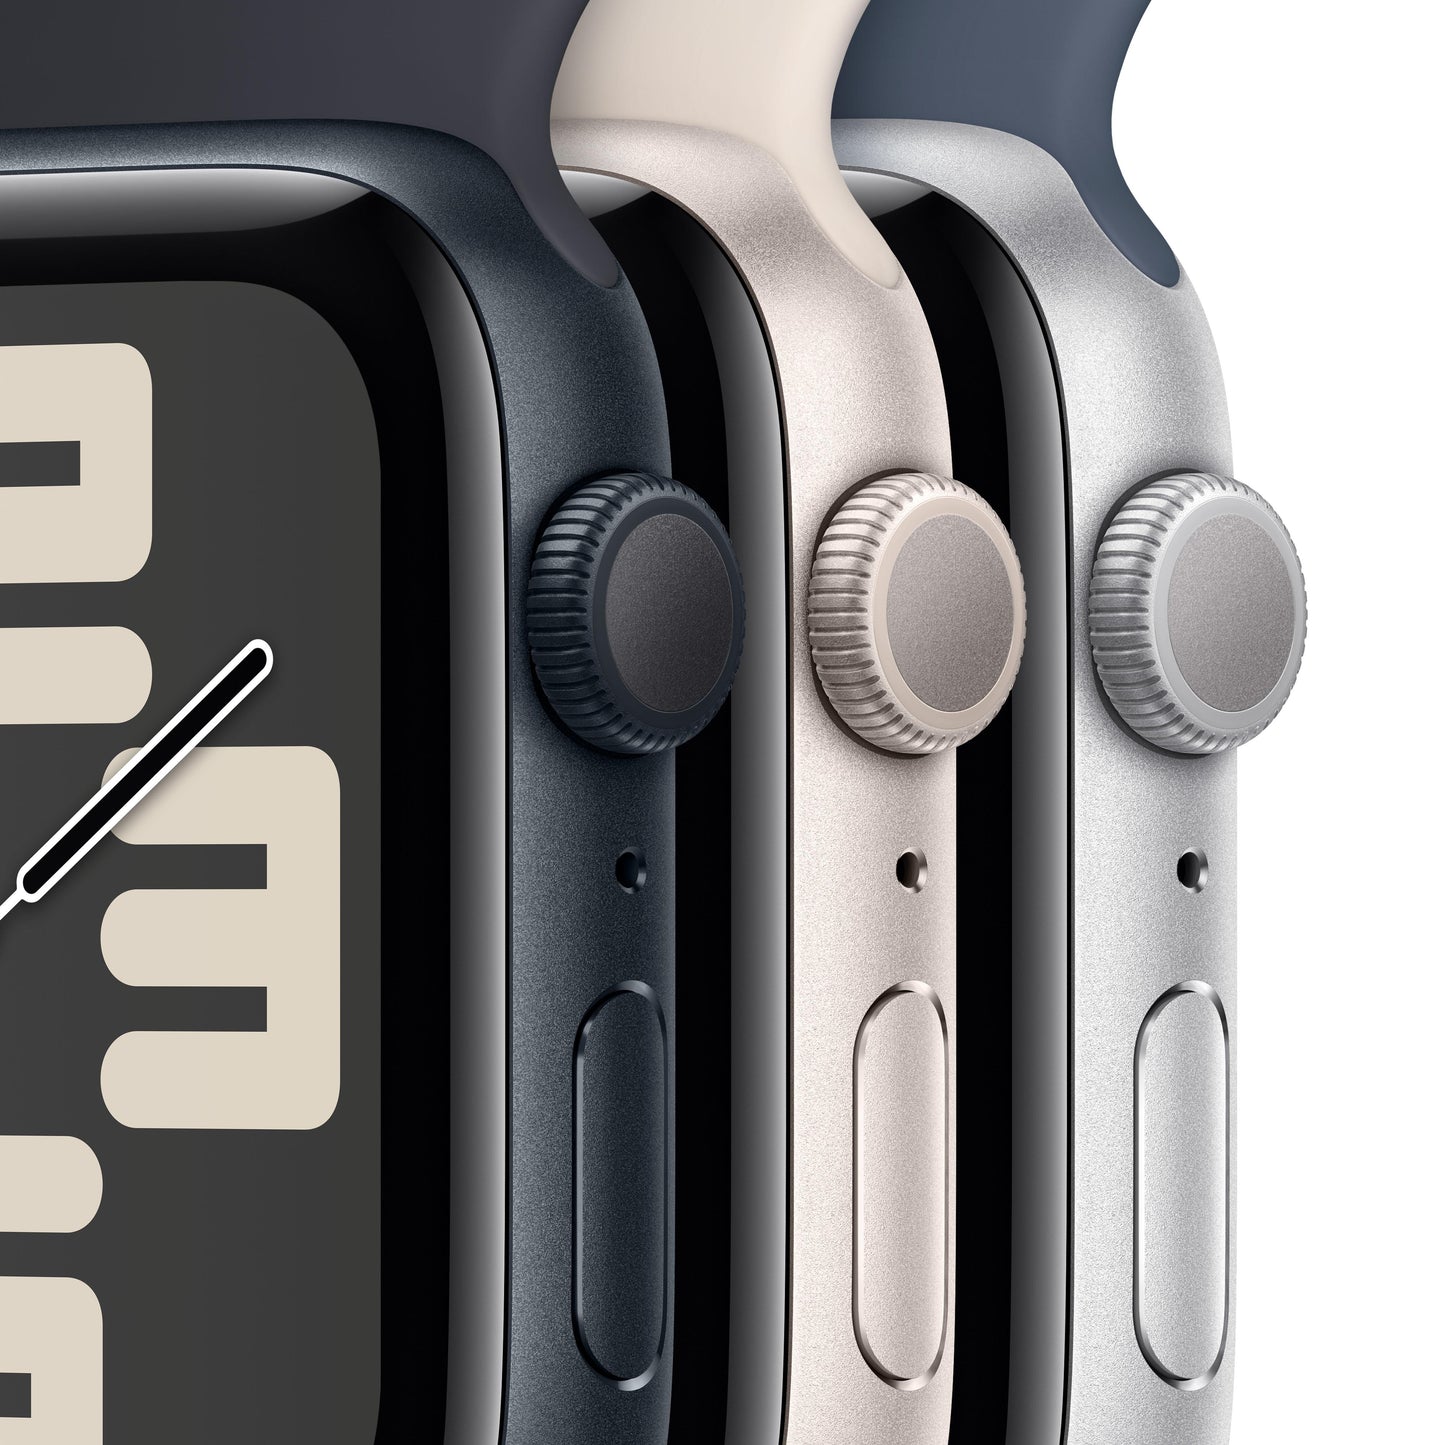 Apple Watch SE (GPS) - Caja de aluminio en plata de 40 mm - Correa deportiva azul tempestad - Talla S/M